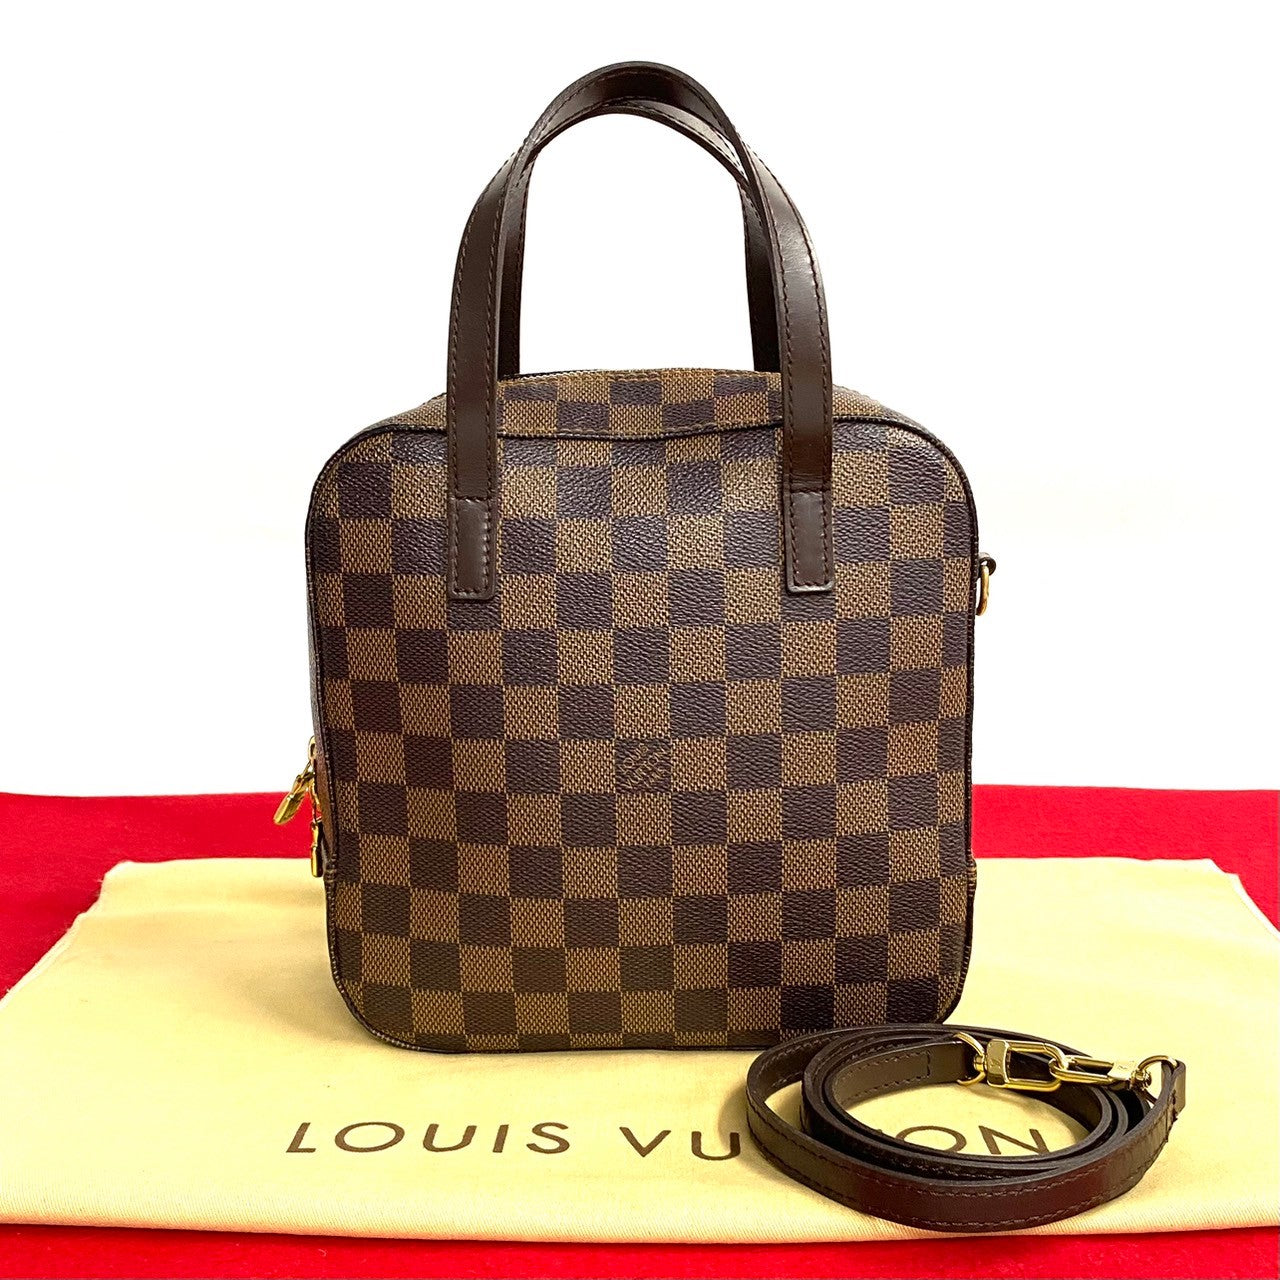 Louis Vuitton Spontini Canvas Handbag N48021 in Excellent condition